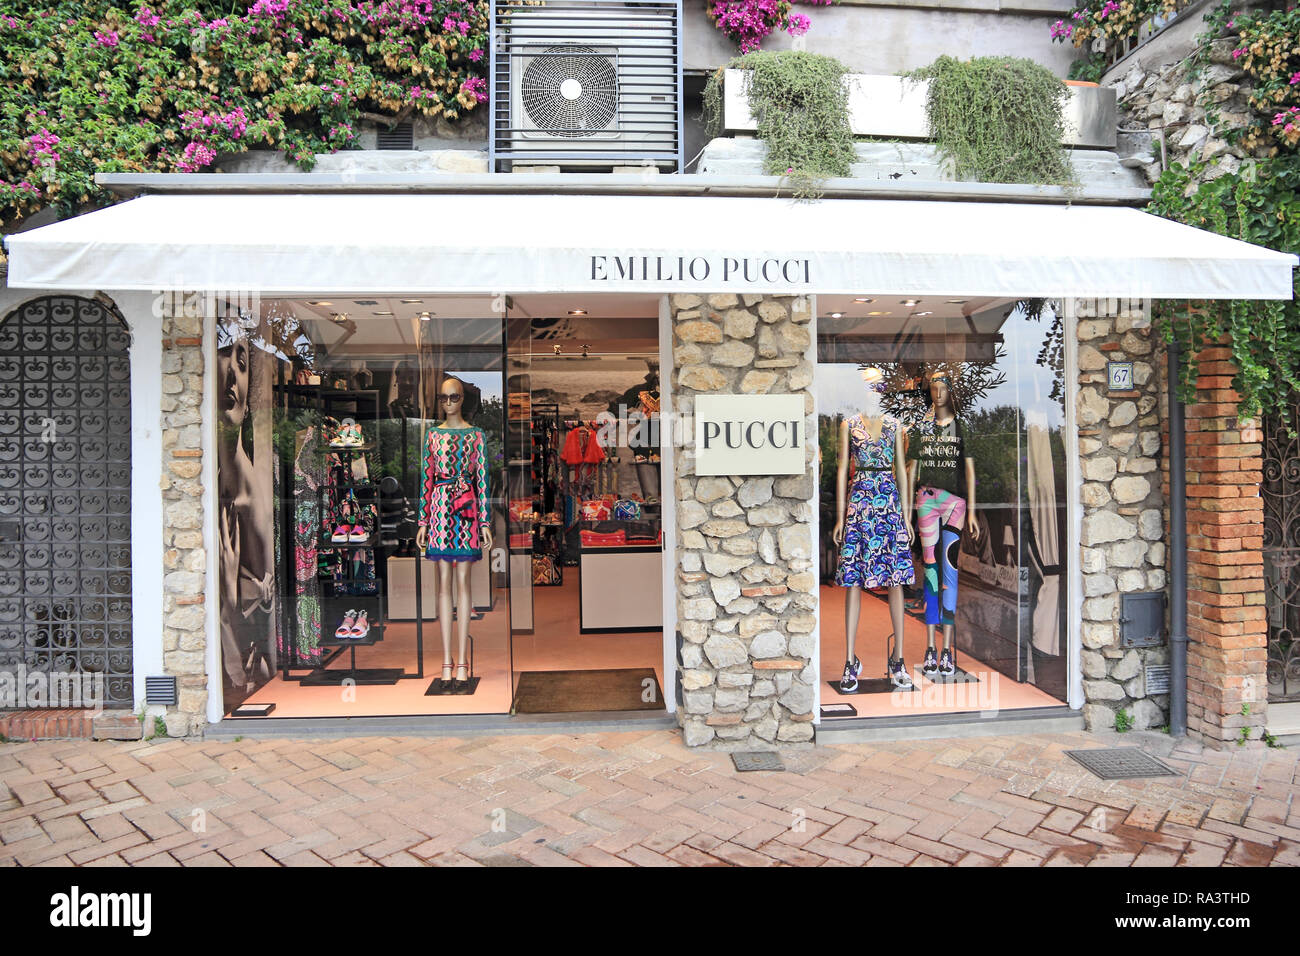 Emilio Pucci shop, Capri Stock Photo - Alamy